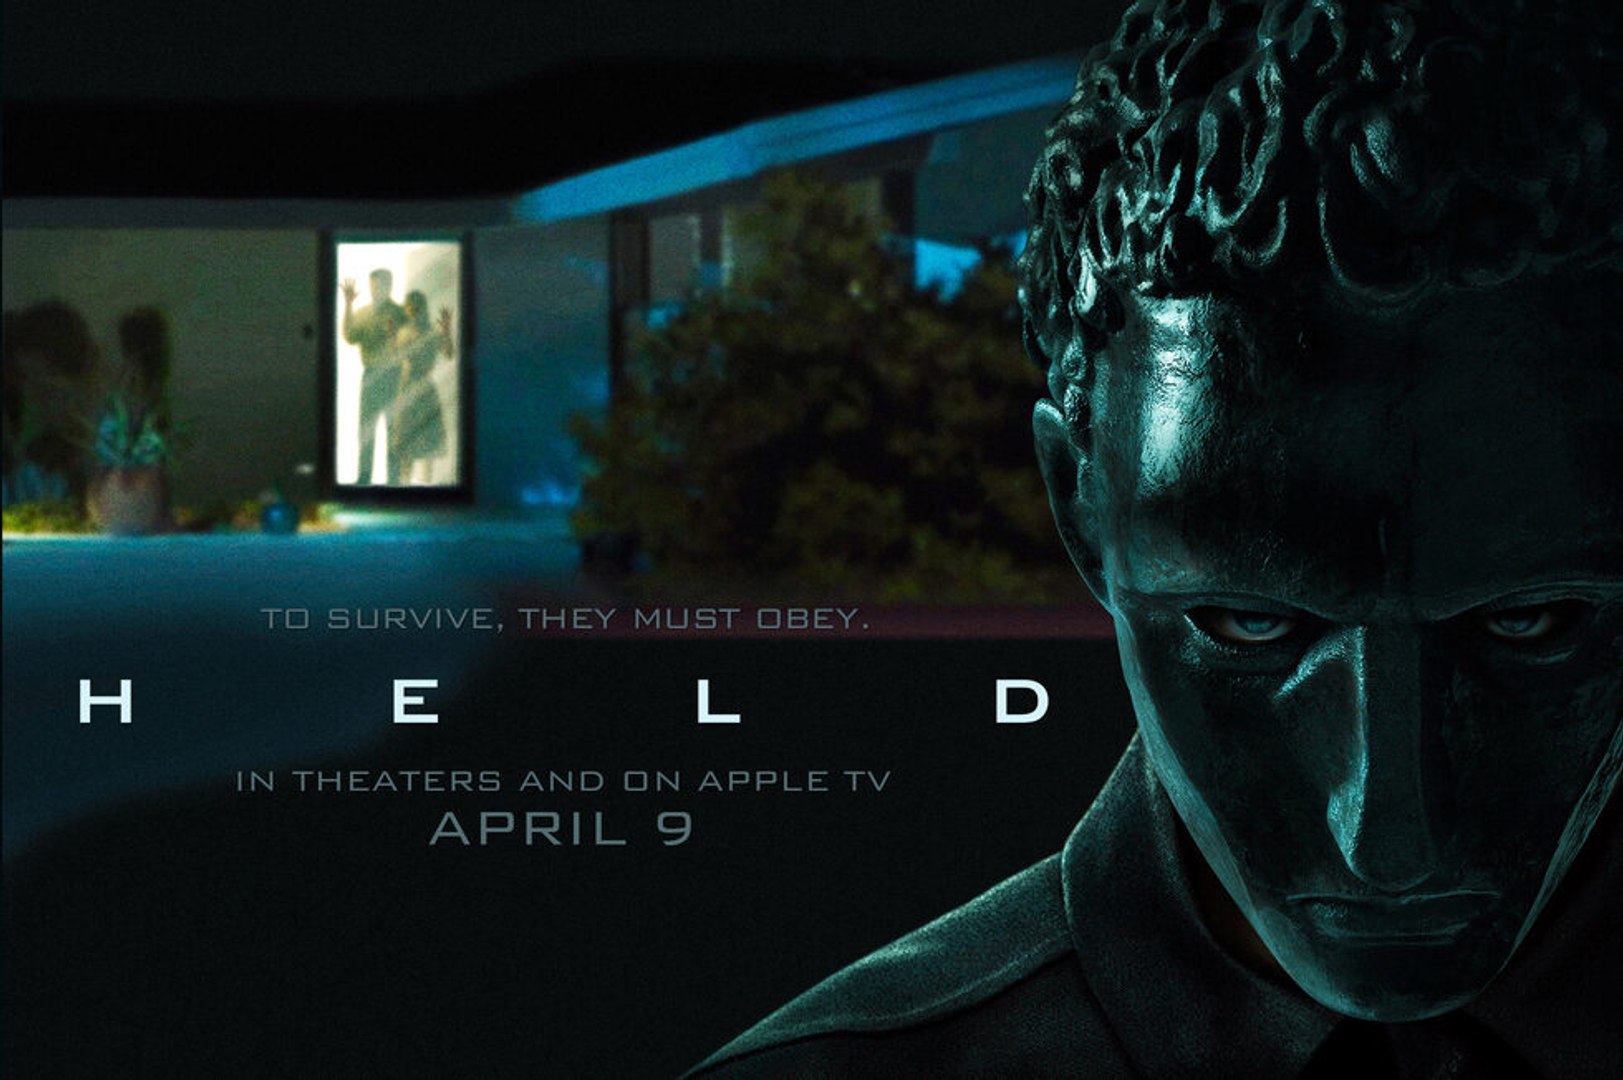 HELD Official Trailer (2021) Bart Johnson, Jill Awbrey Horror Thriller HD 